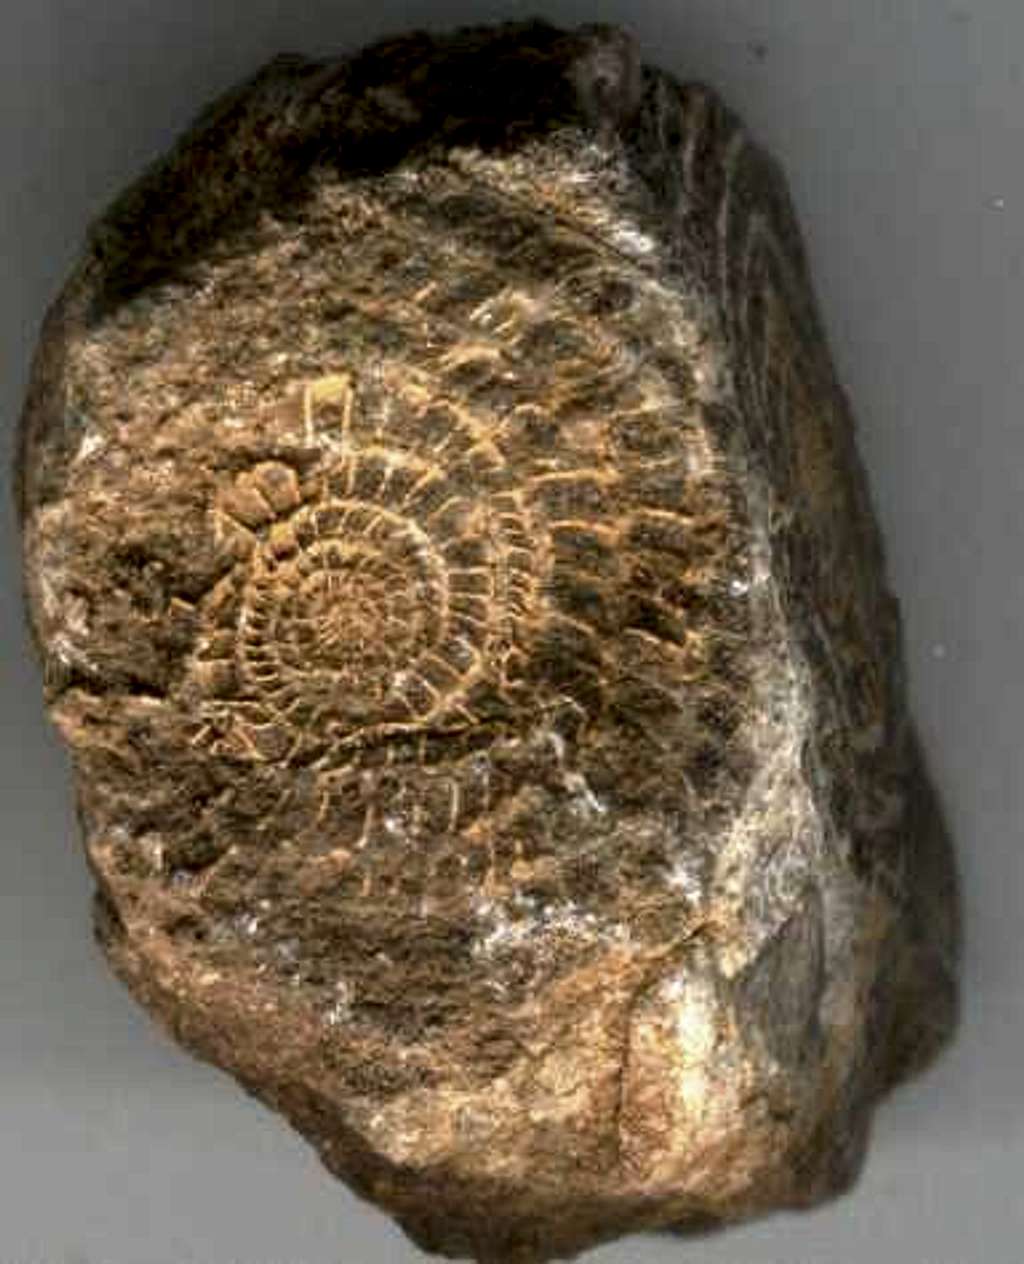 Fossils on the Santa Marina